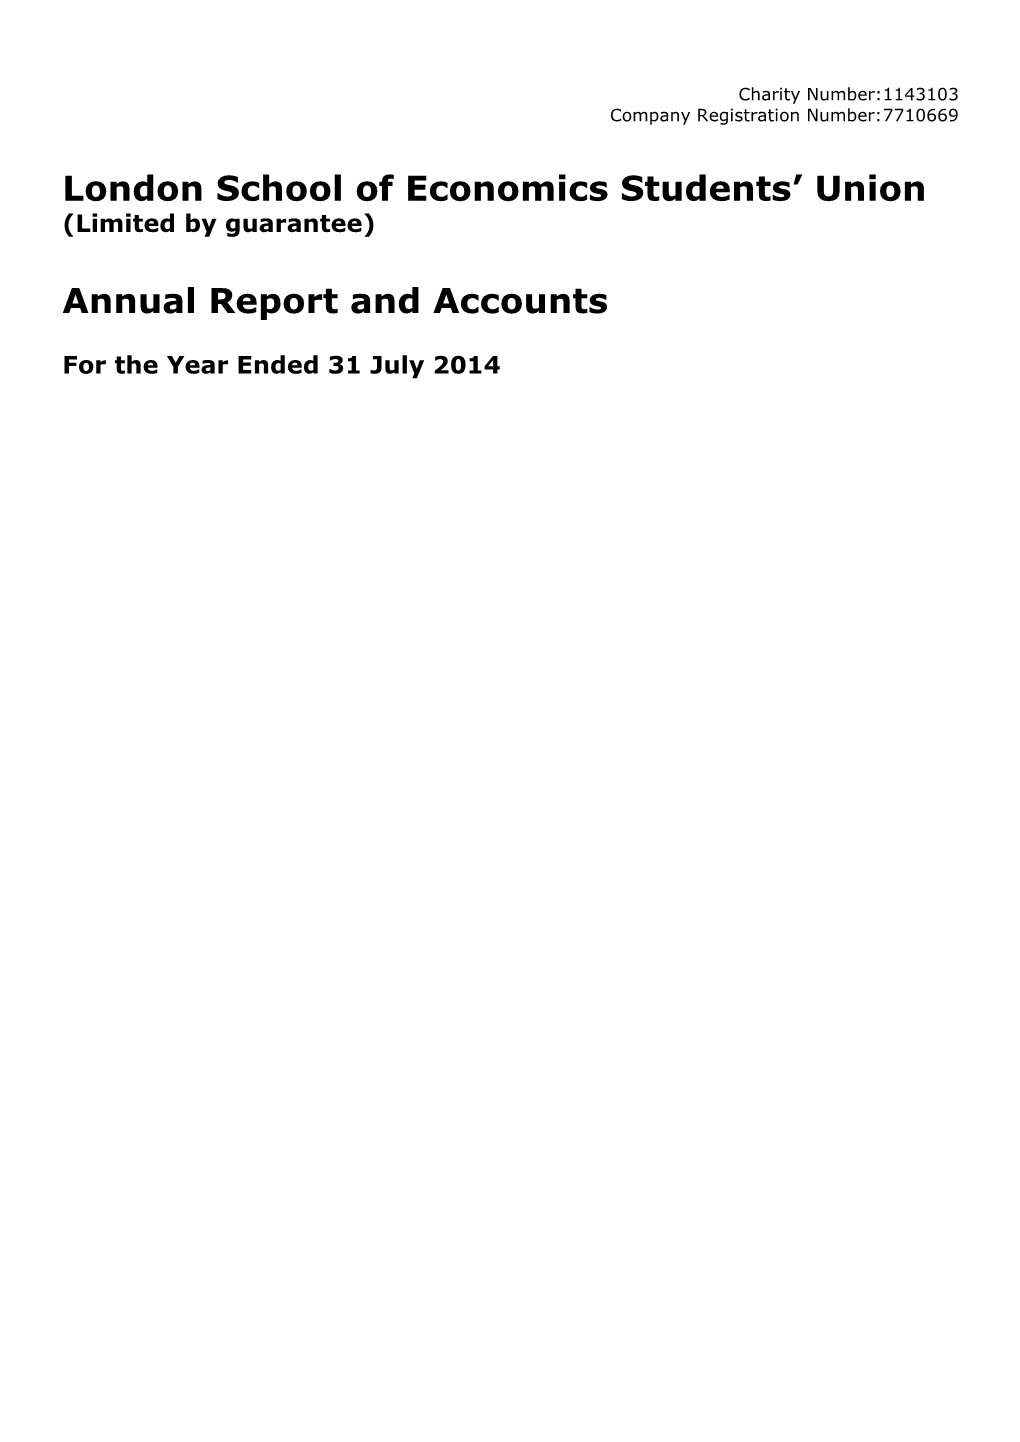 LSESU-Annual-Accounts-2013-14.Pdf